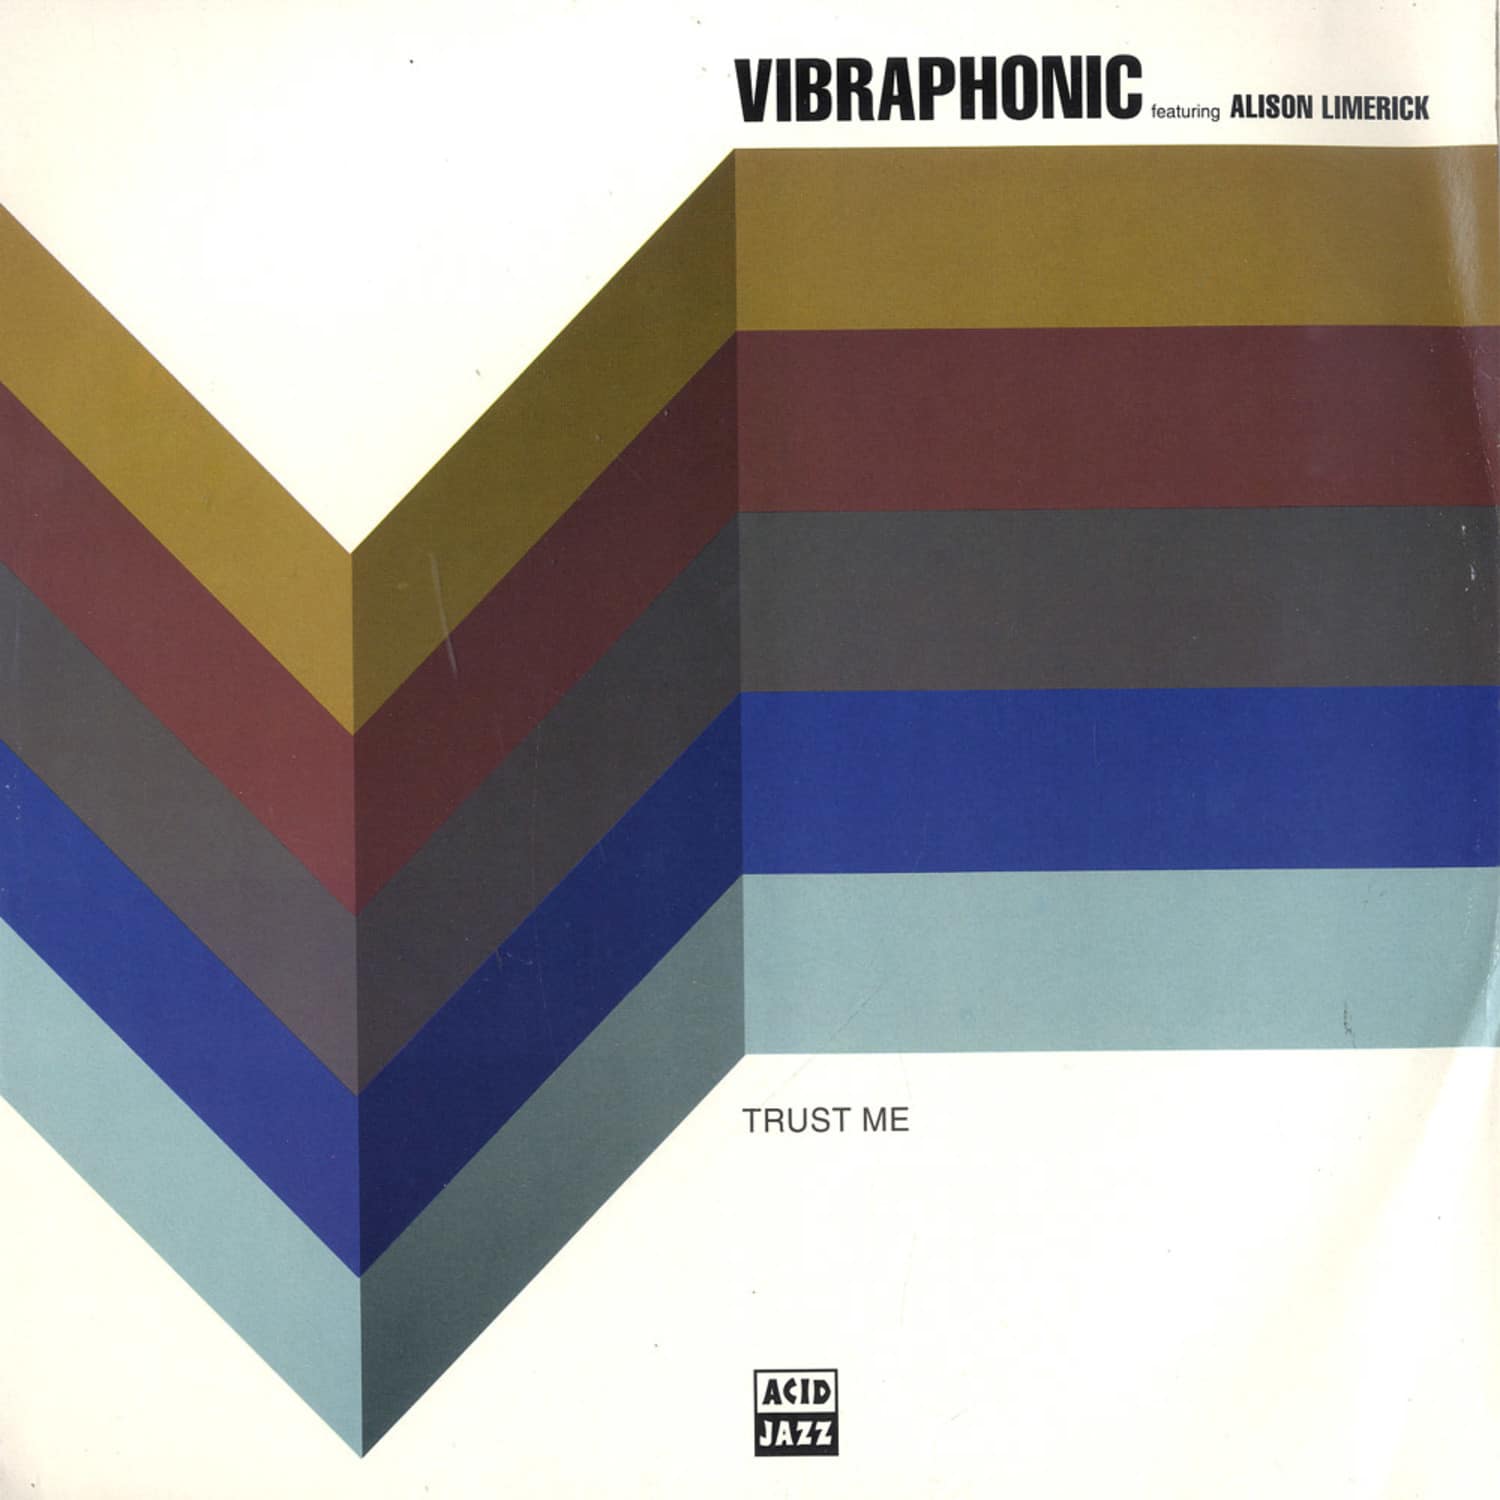 Vibraphonic feat. Alison Limerick - TRUST ME